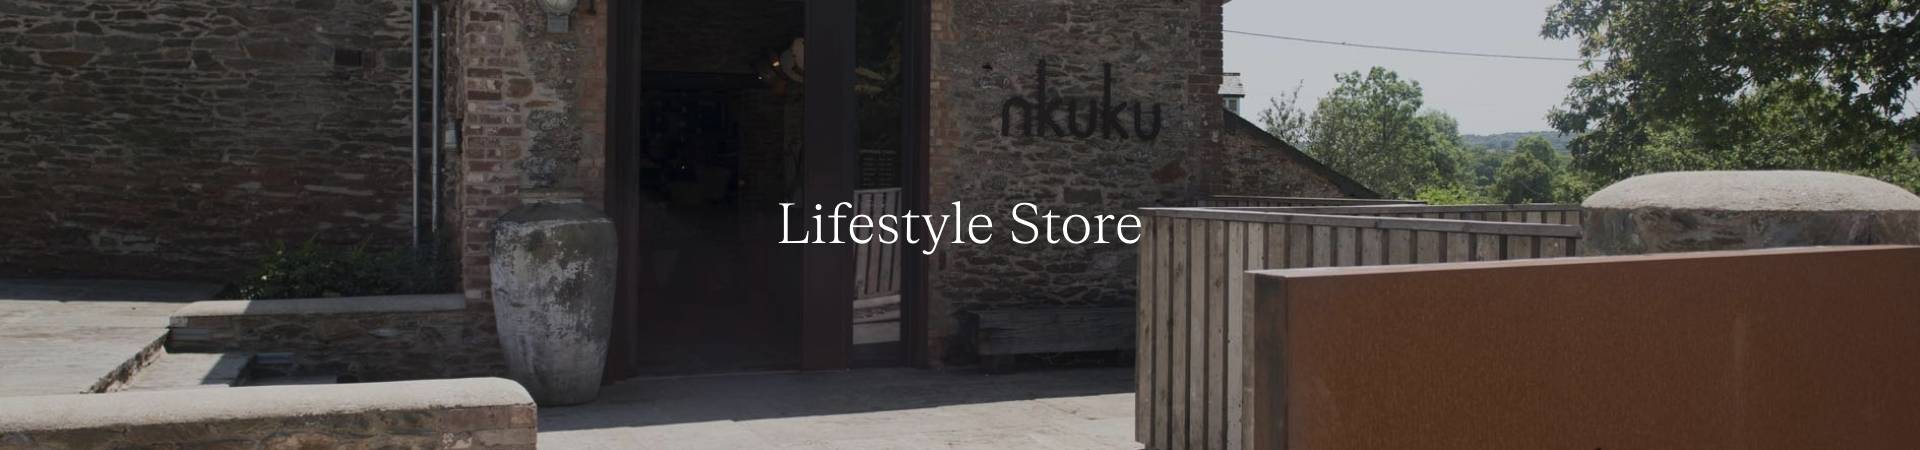 Lifestyle Store.jpg